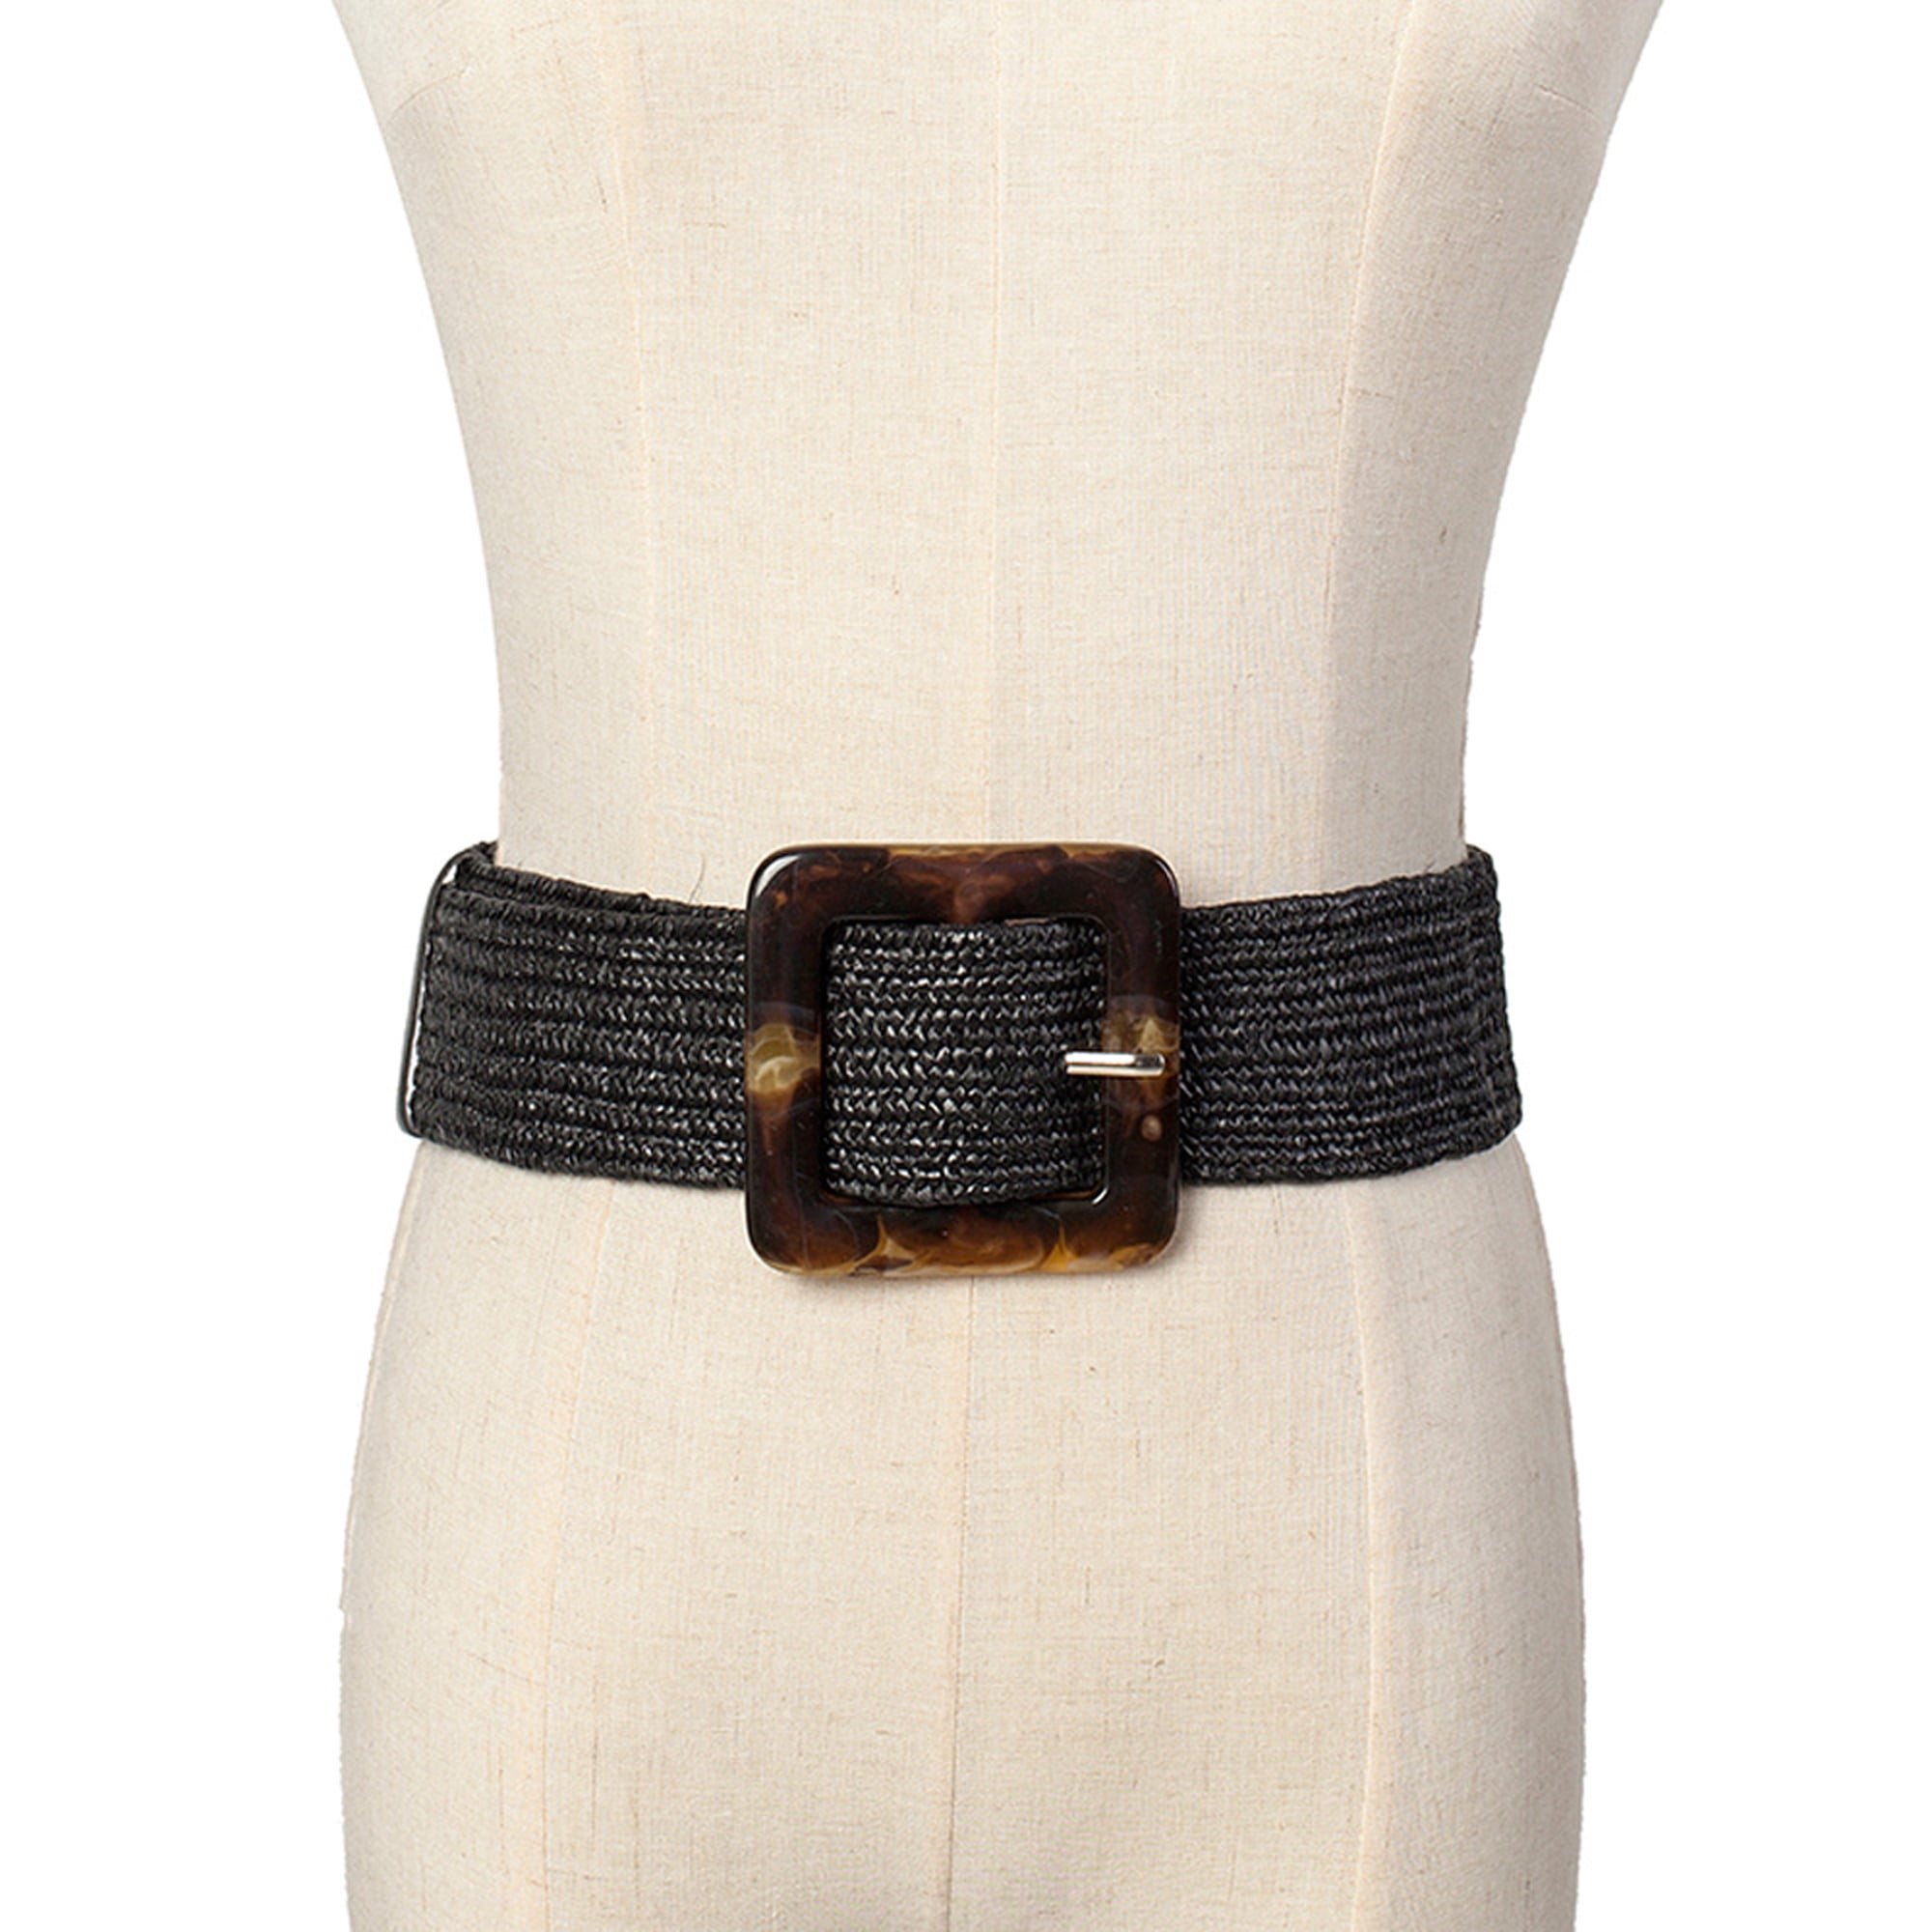 Ladies Knotted Simple Belt,Stylish Wild Belt Leisure Dress Belt